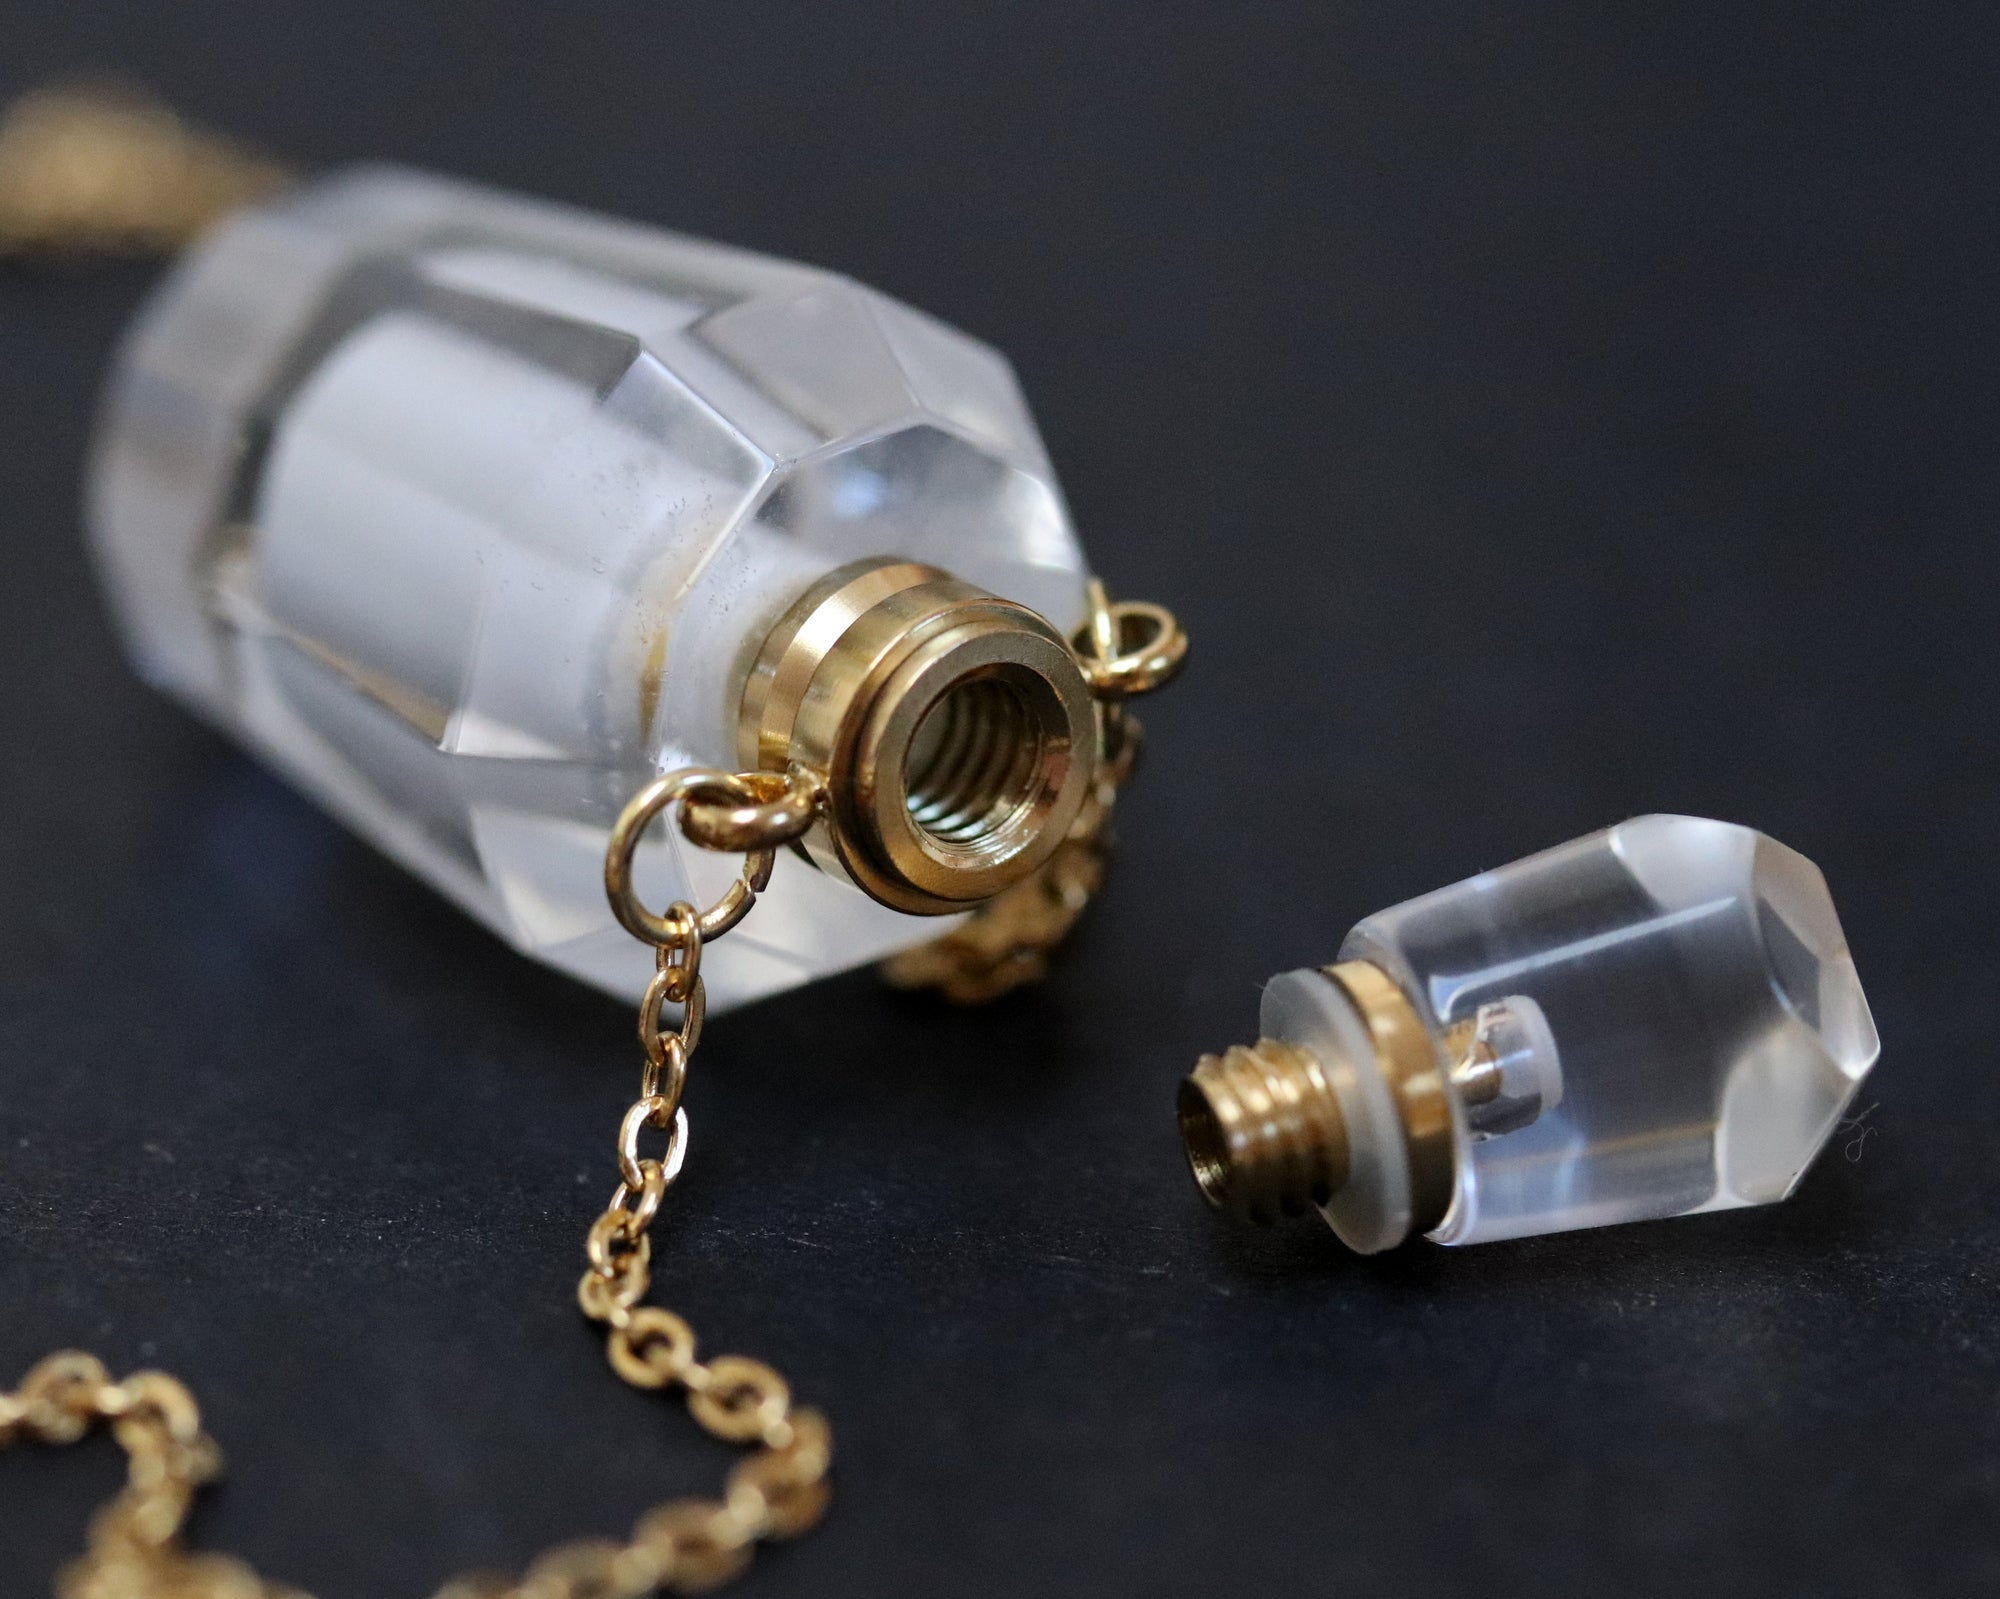 Crystal bottle pendant, perfume or essential oil crystal bottle necklace